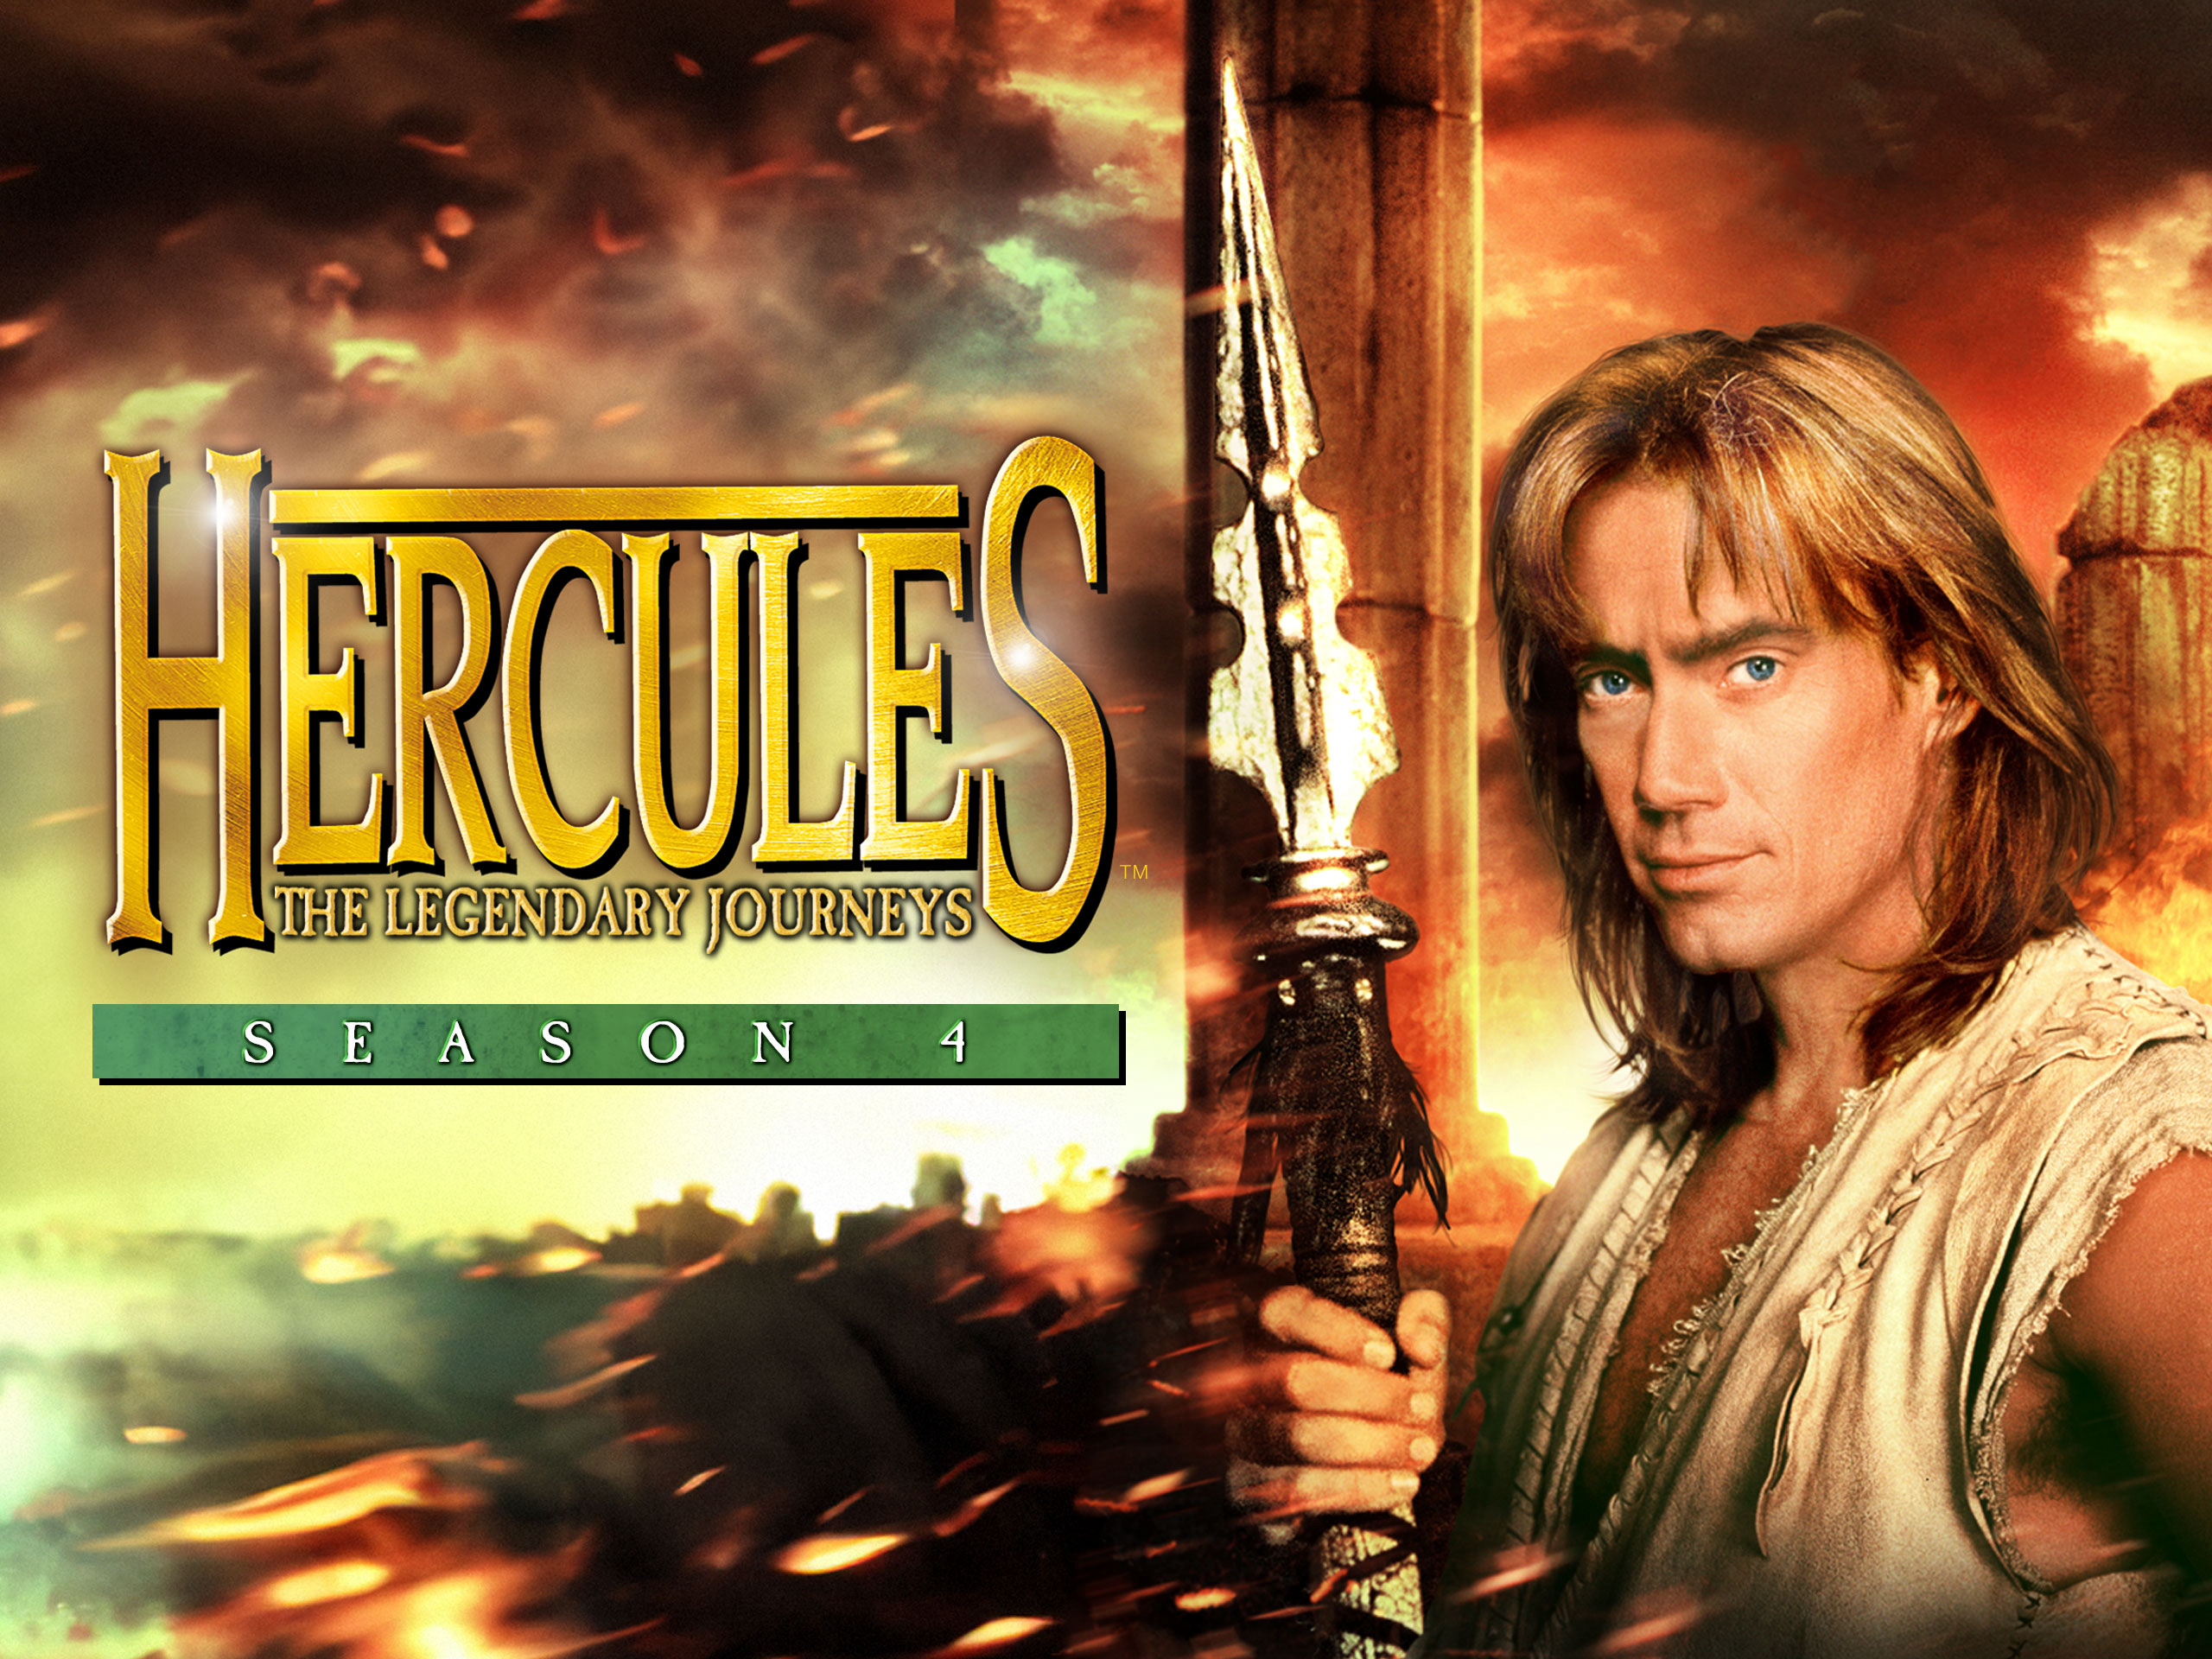 Hercules: The Legendary Journeys (Season 4) / Hercules: The Legendary Journeys (Season 4) (1997)